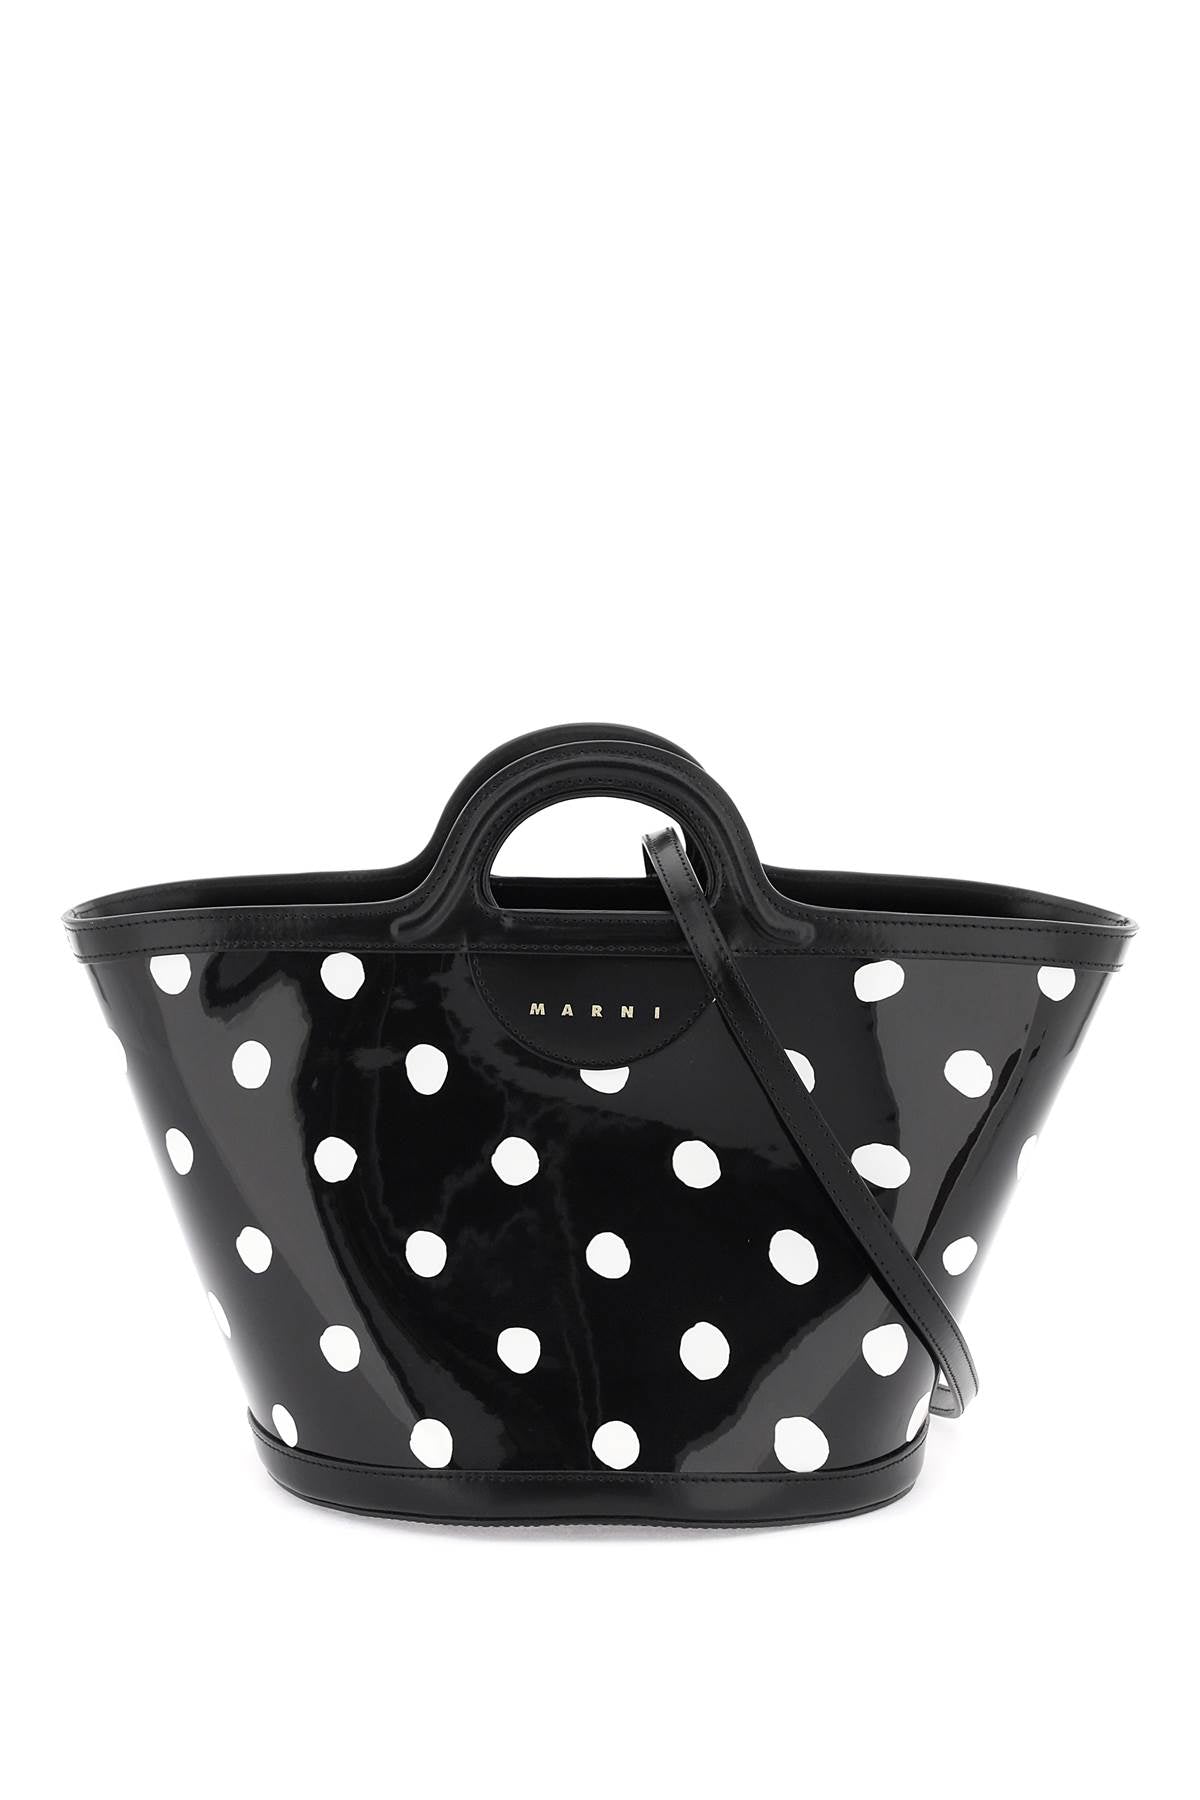 Marni patent leather tropicalia bucket bag with polka-dot pattern BMMP0097U1P6048 BLACK LILY WHITE